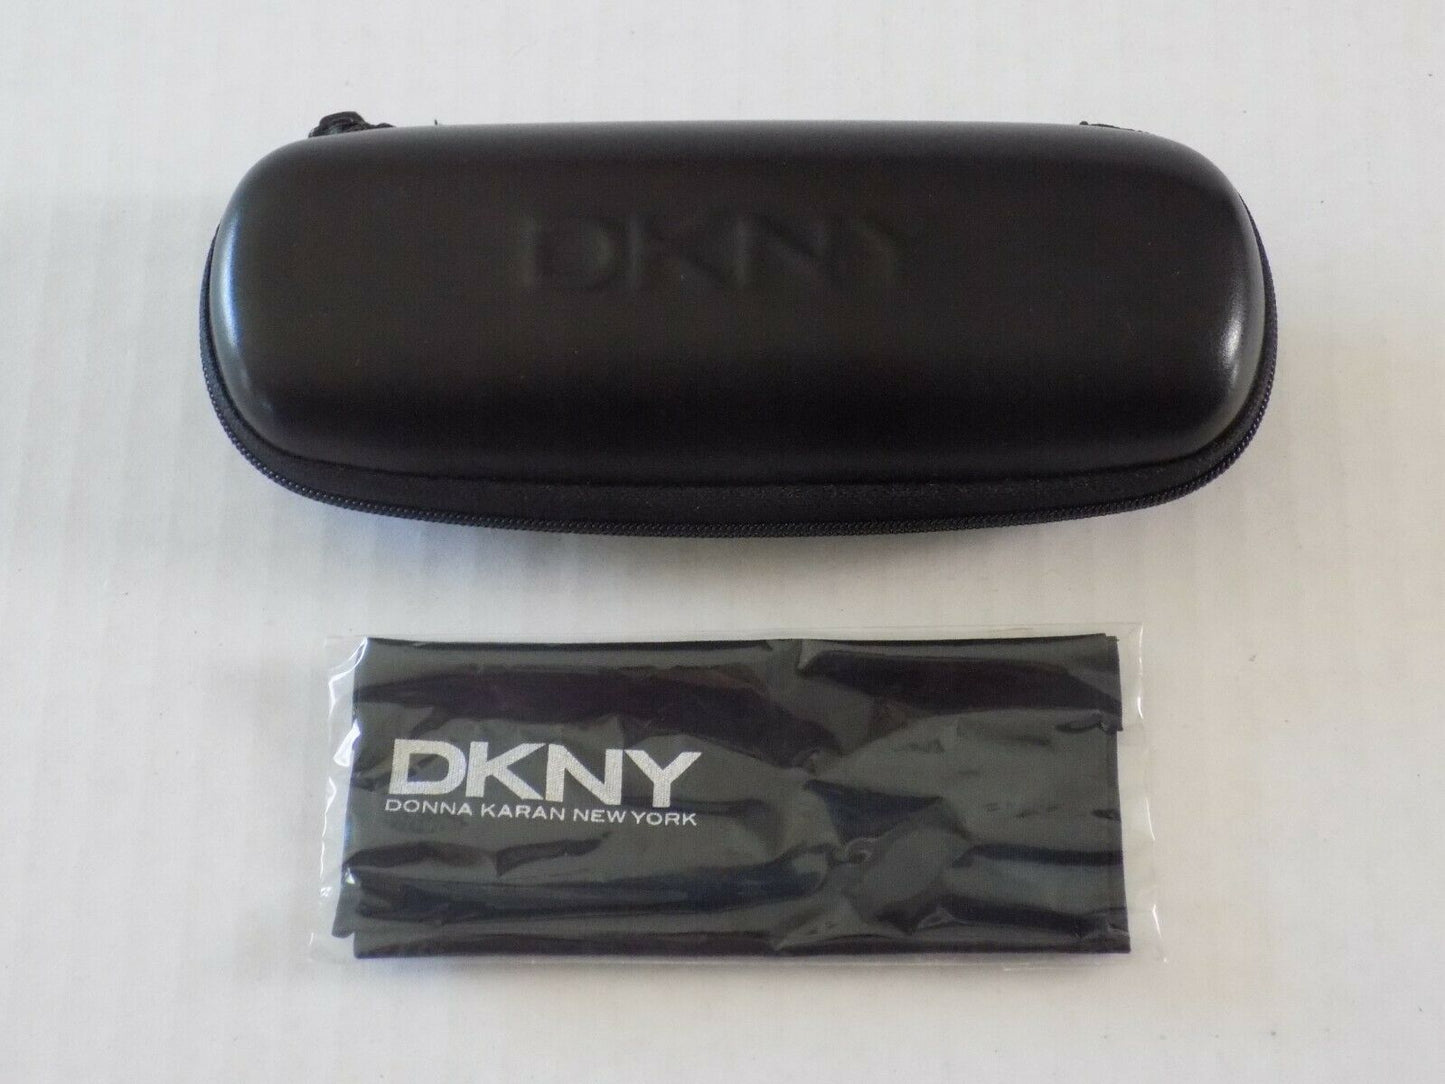 DKNY DK1000-272 52mm New Eyeglasses